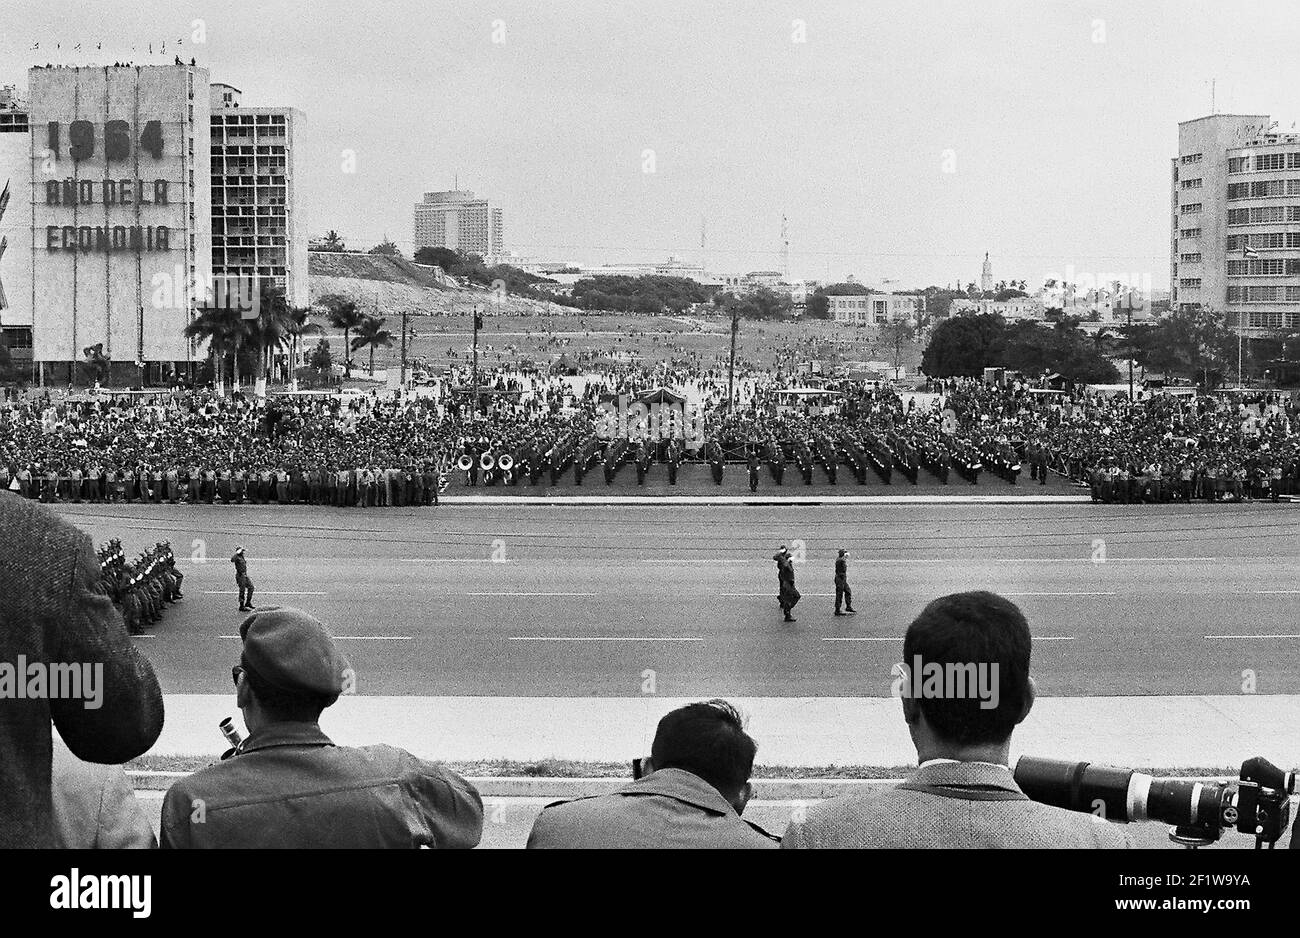 Military parade, Havana (Cuba : Province), Havana (Cuba), Cuba, 1963. From the Deena Stryker photographs collection. () Stock Photo